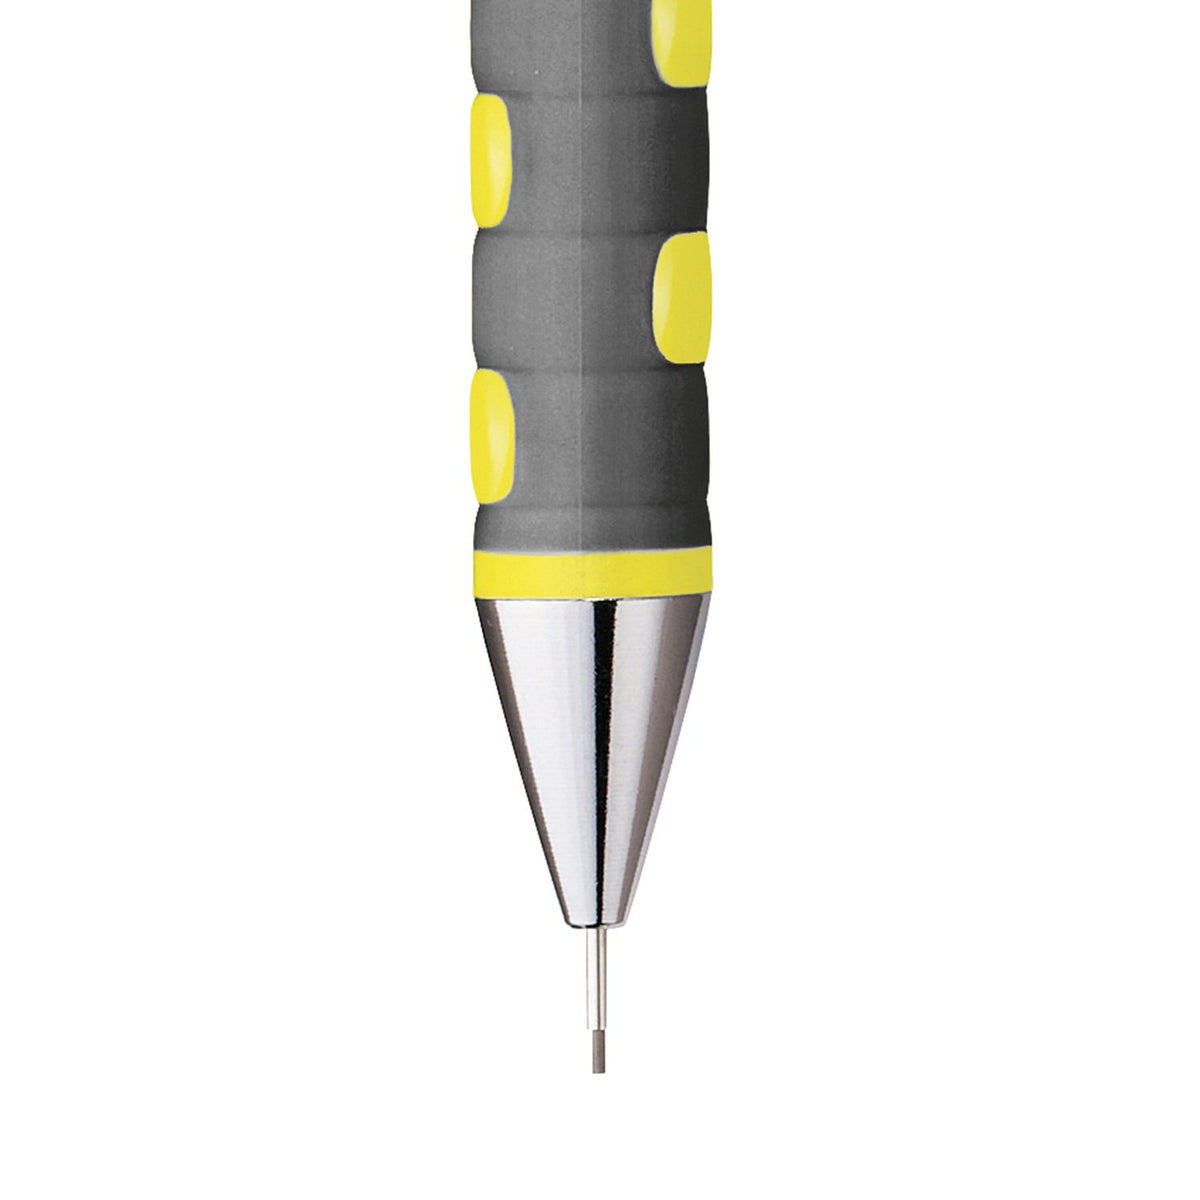 Rotring Tikky Mechanical Pencil HB 0.50mm - White Barrel (Blister Pack)